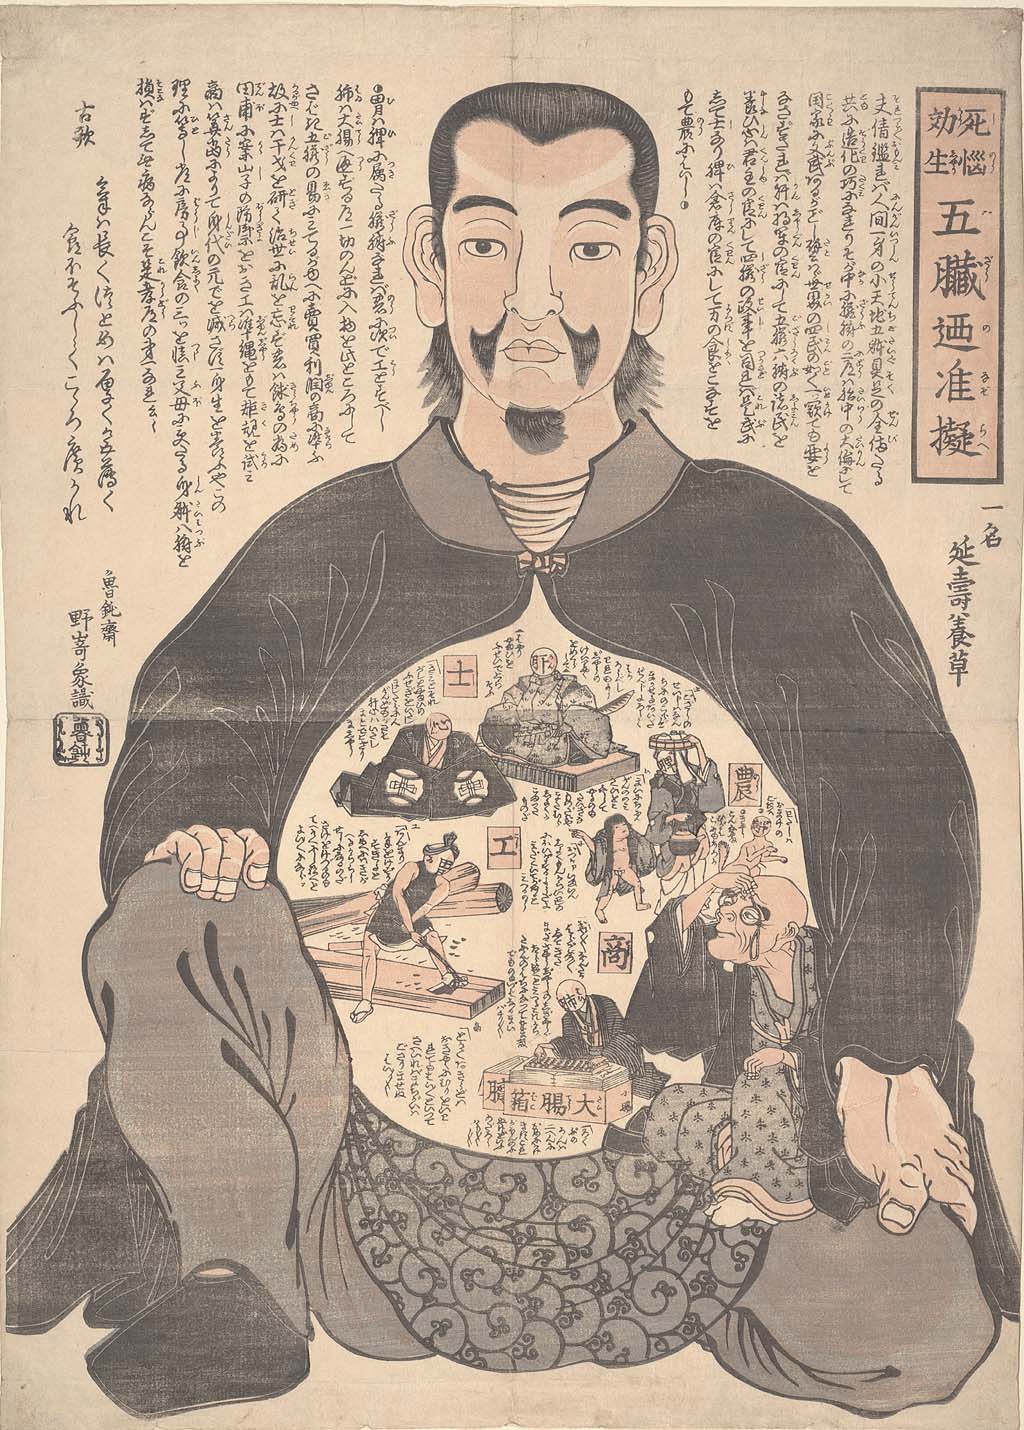 Shinō kōshō gozō no nazorae : Suffering, death, and effective life: metaphorical classifying organs according to 4 levels of social status, shinō kōs hō (samurai, farmer, artisan, merchant) Creator/Contributor: Rodonsai, Nozoki Shōshiki, Author Date: late 19th C